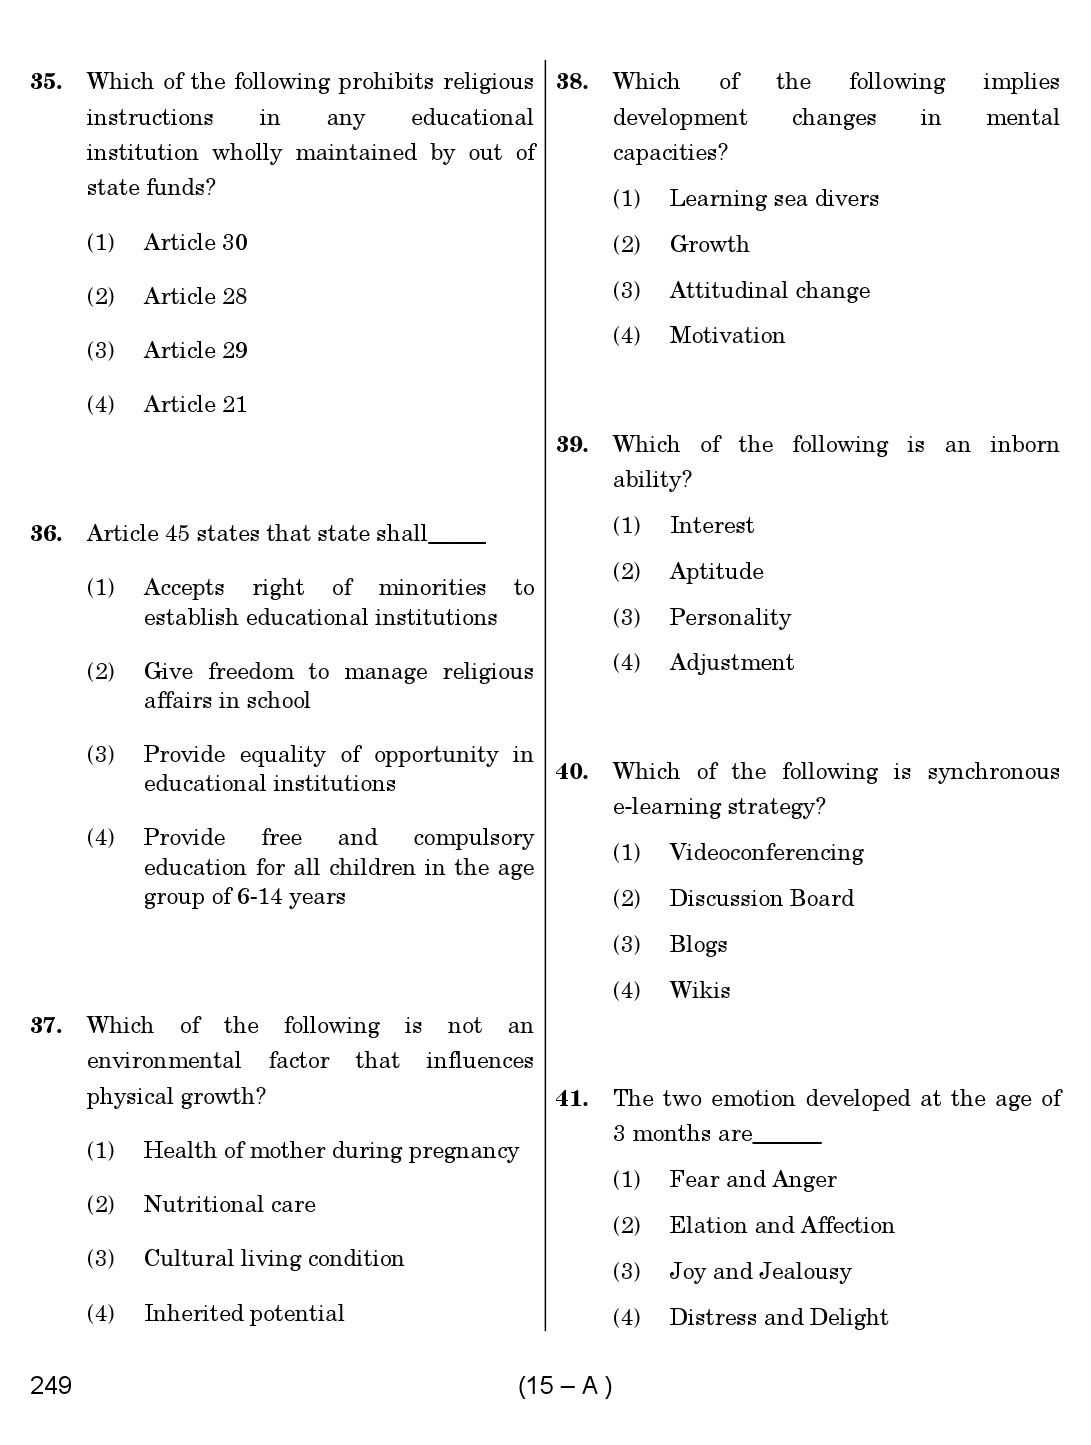 Karnataka PSC Principal Exam Sample Question Paper Subject code 249 15